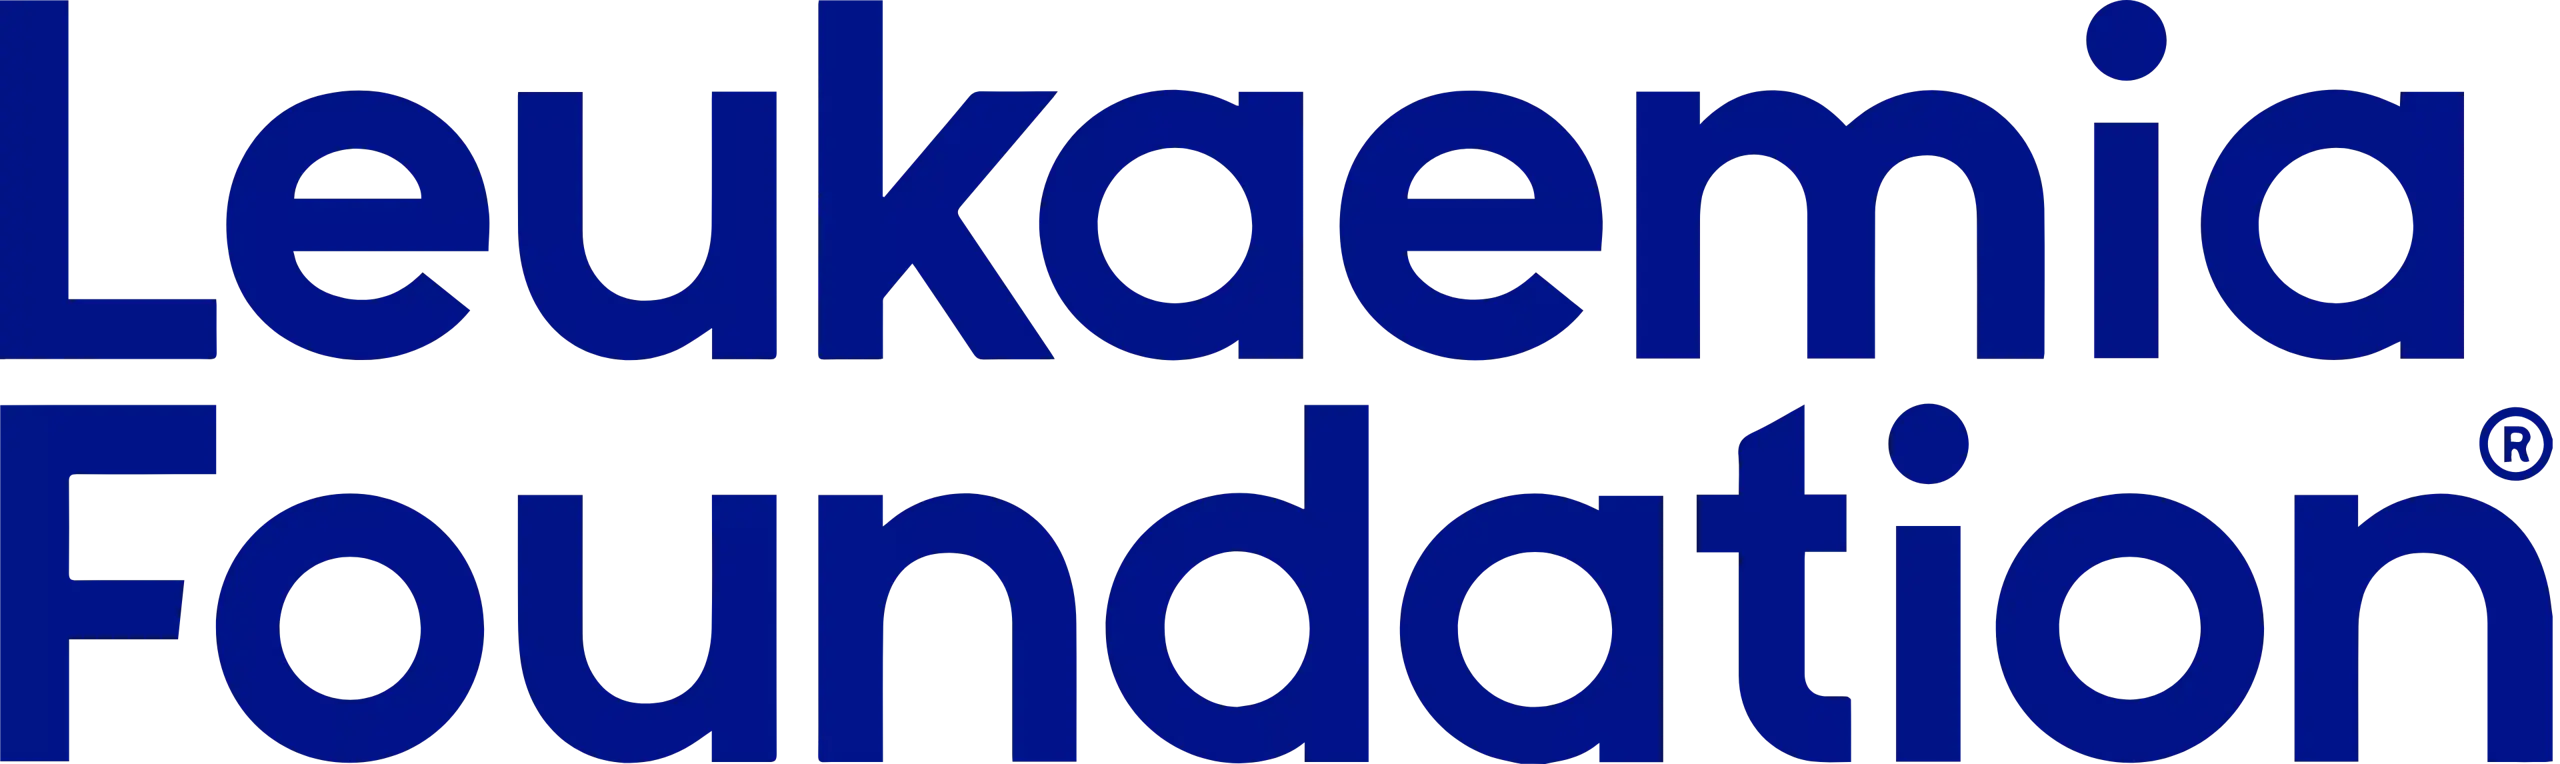 The Leukaemia Foundation logo